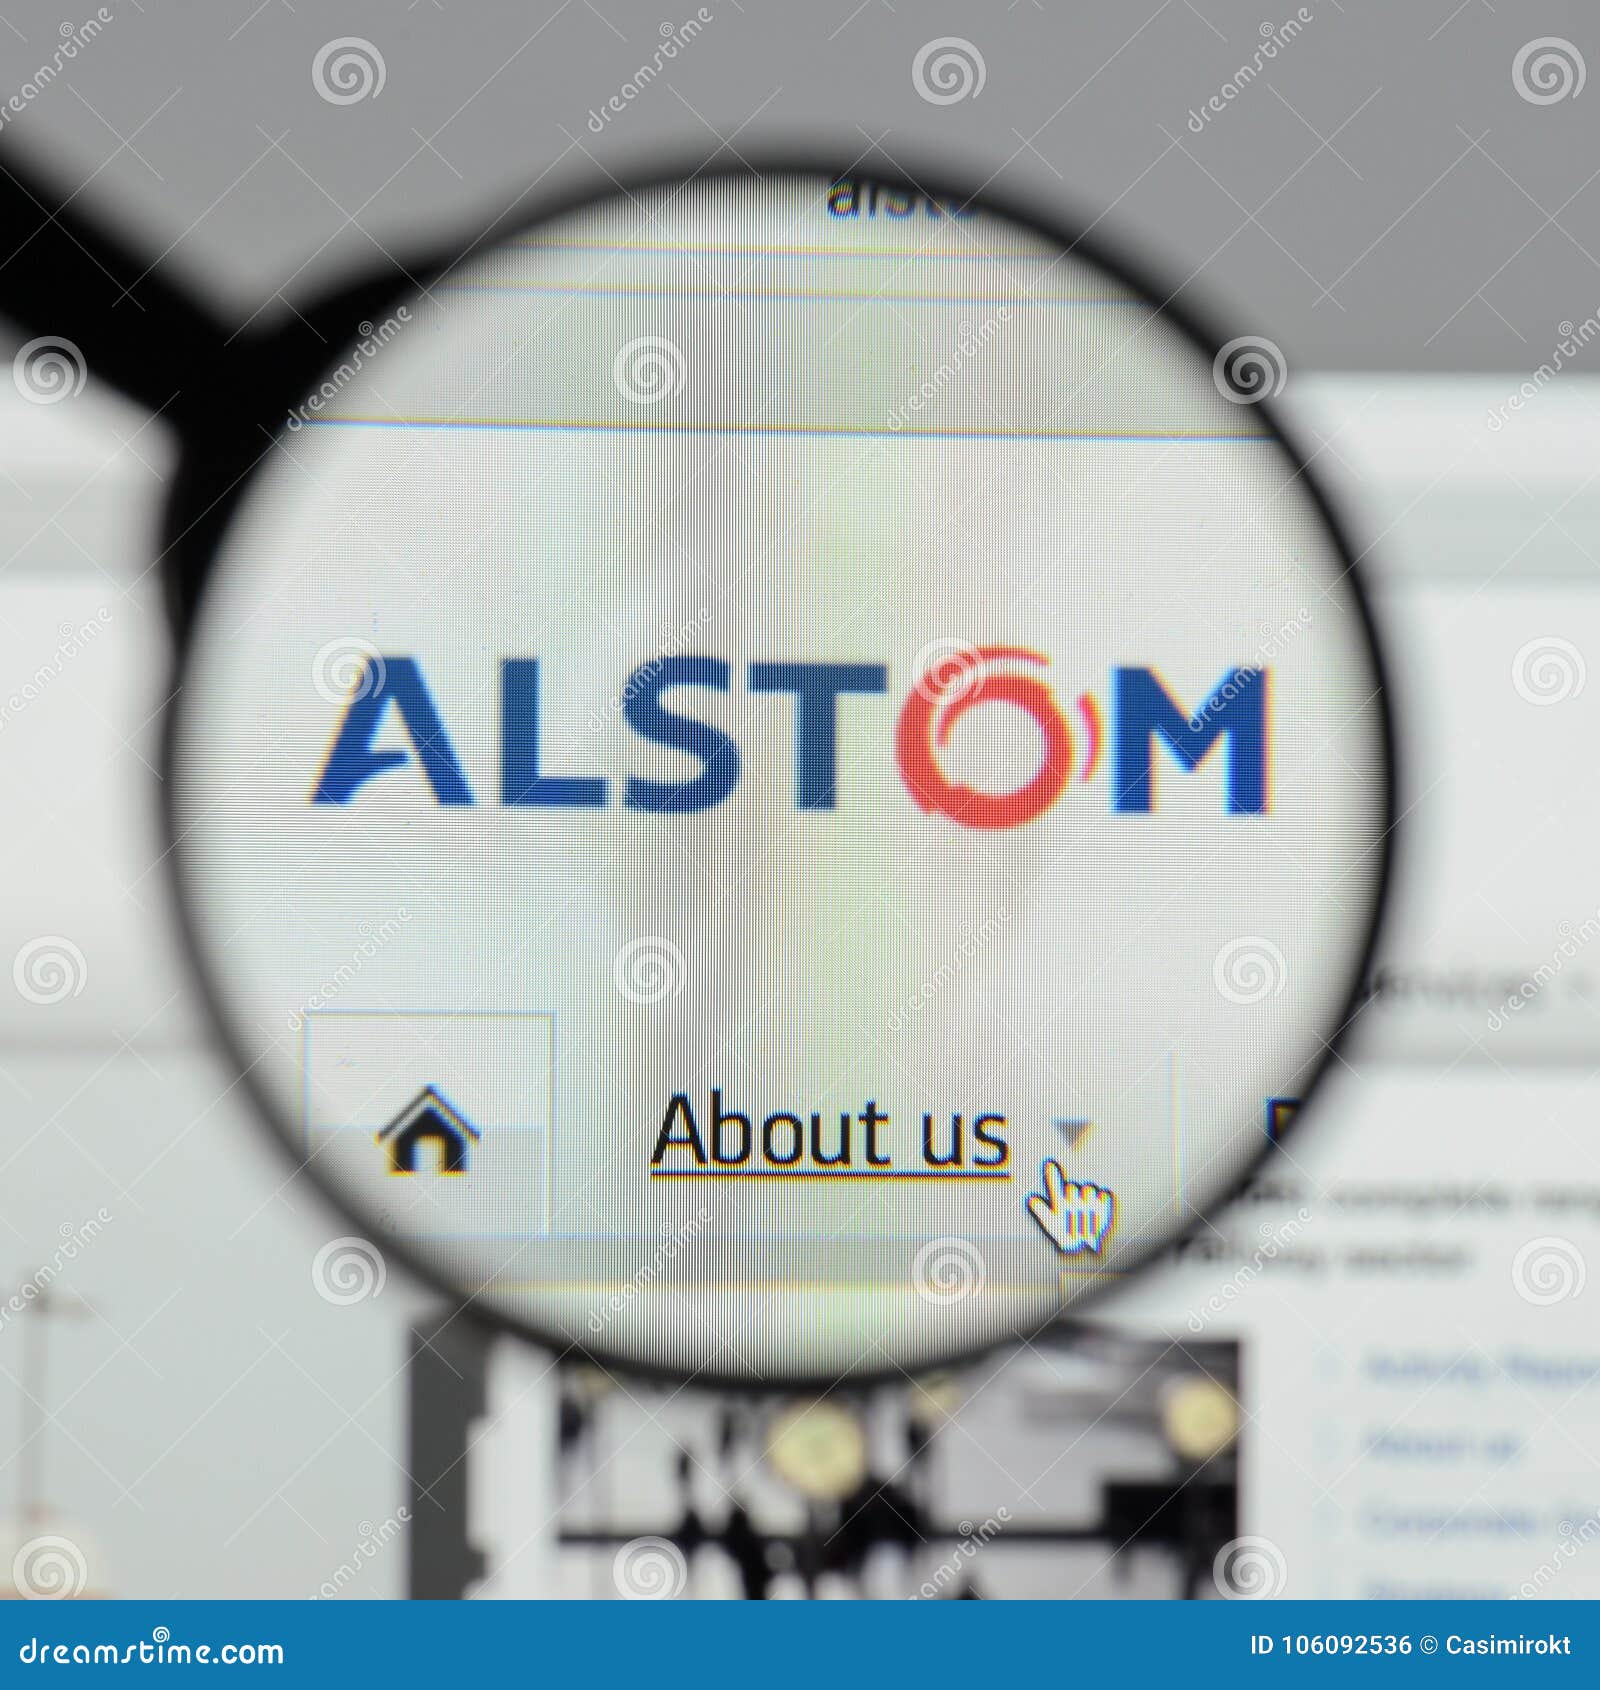 Alstom Logo Photos Free Royalty Free Stock Photos From Dreamstime